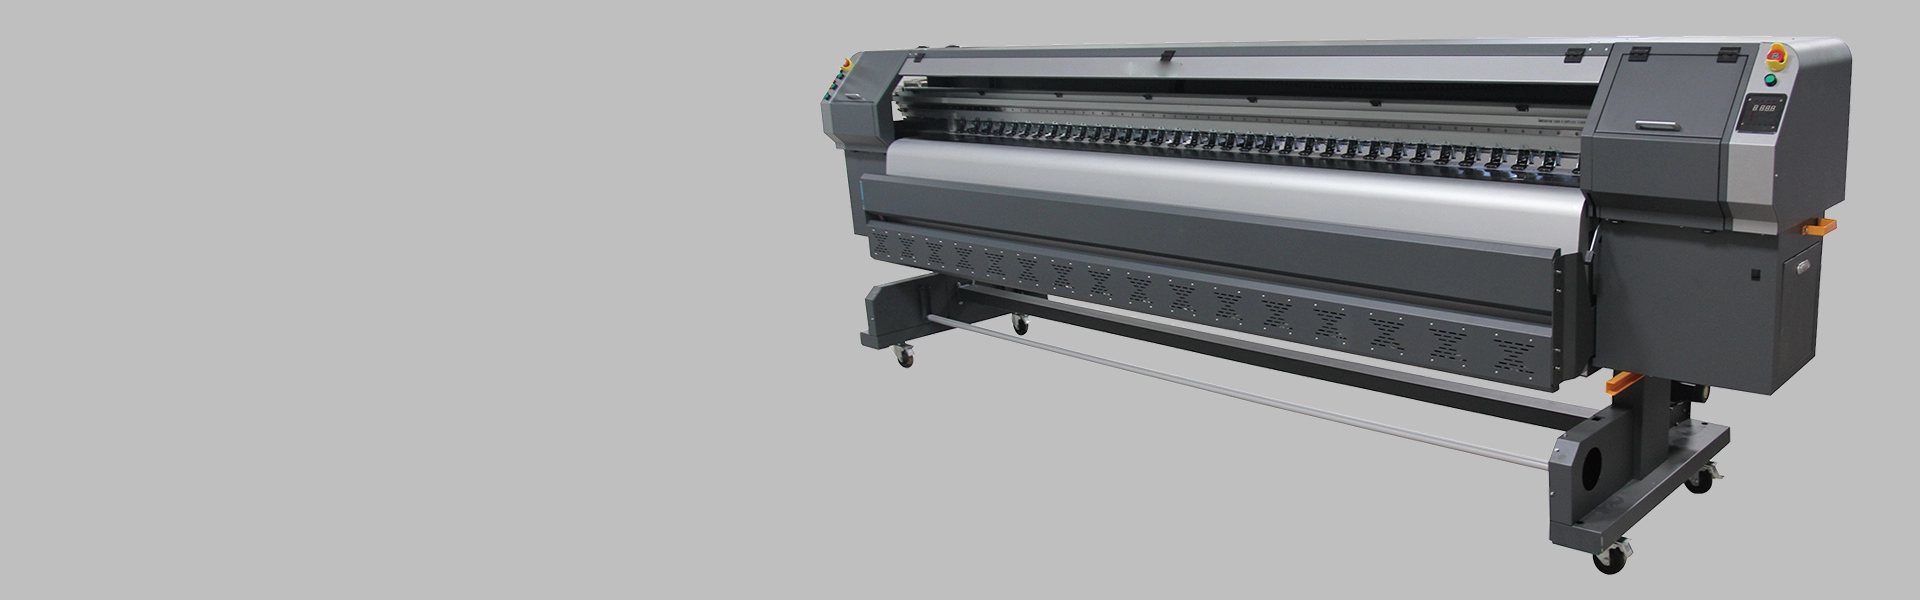 Impressora solvente Konica 512i CK8